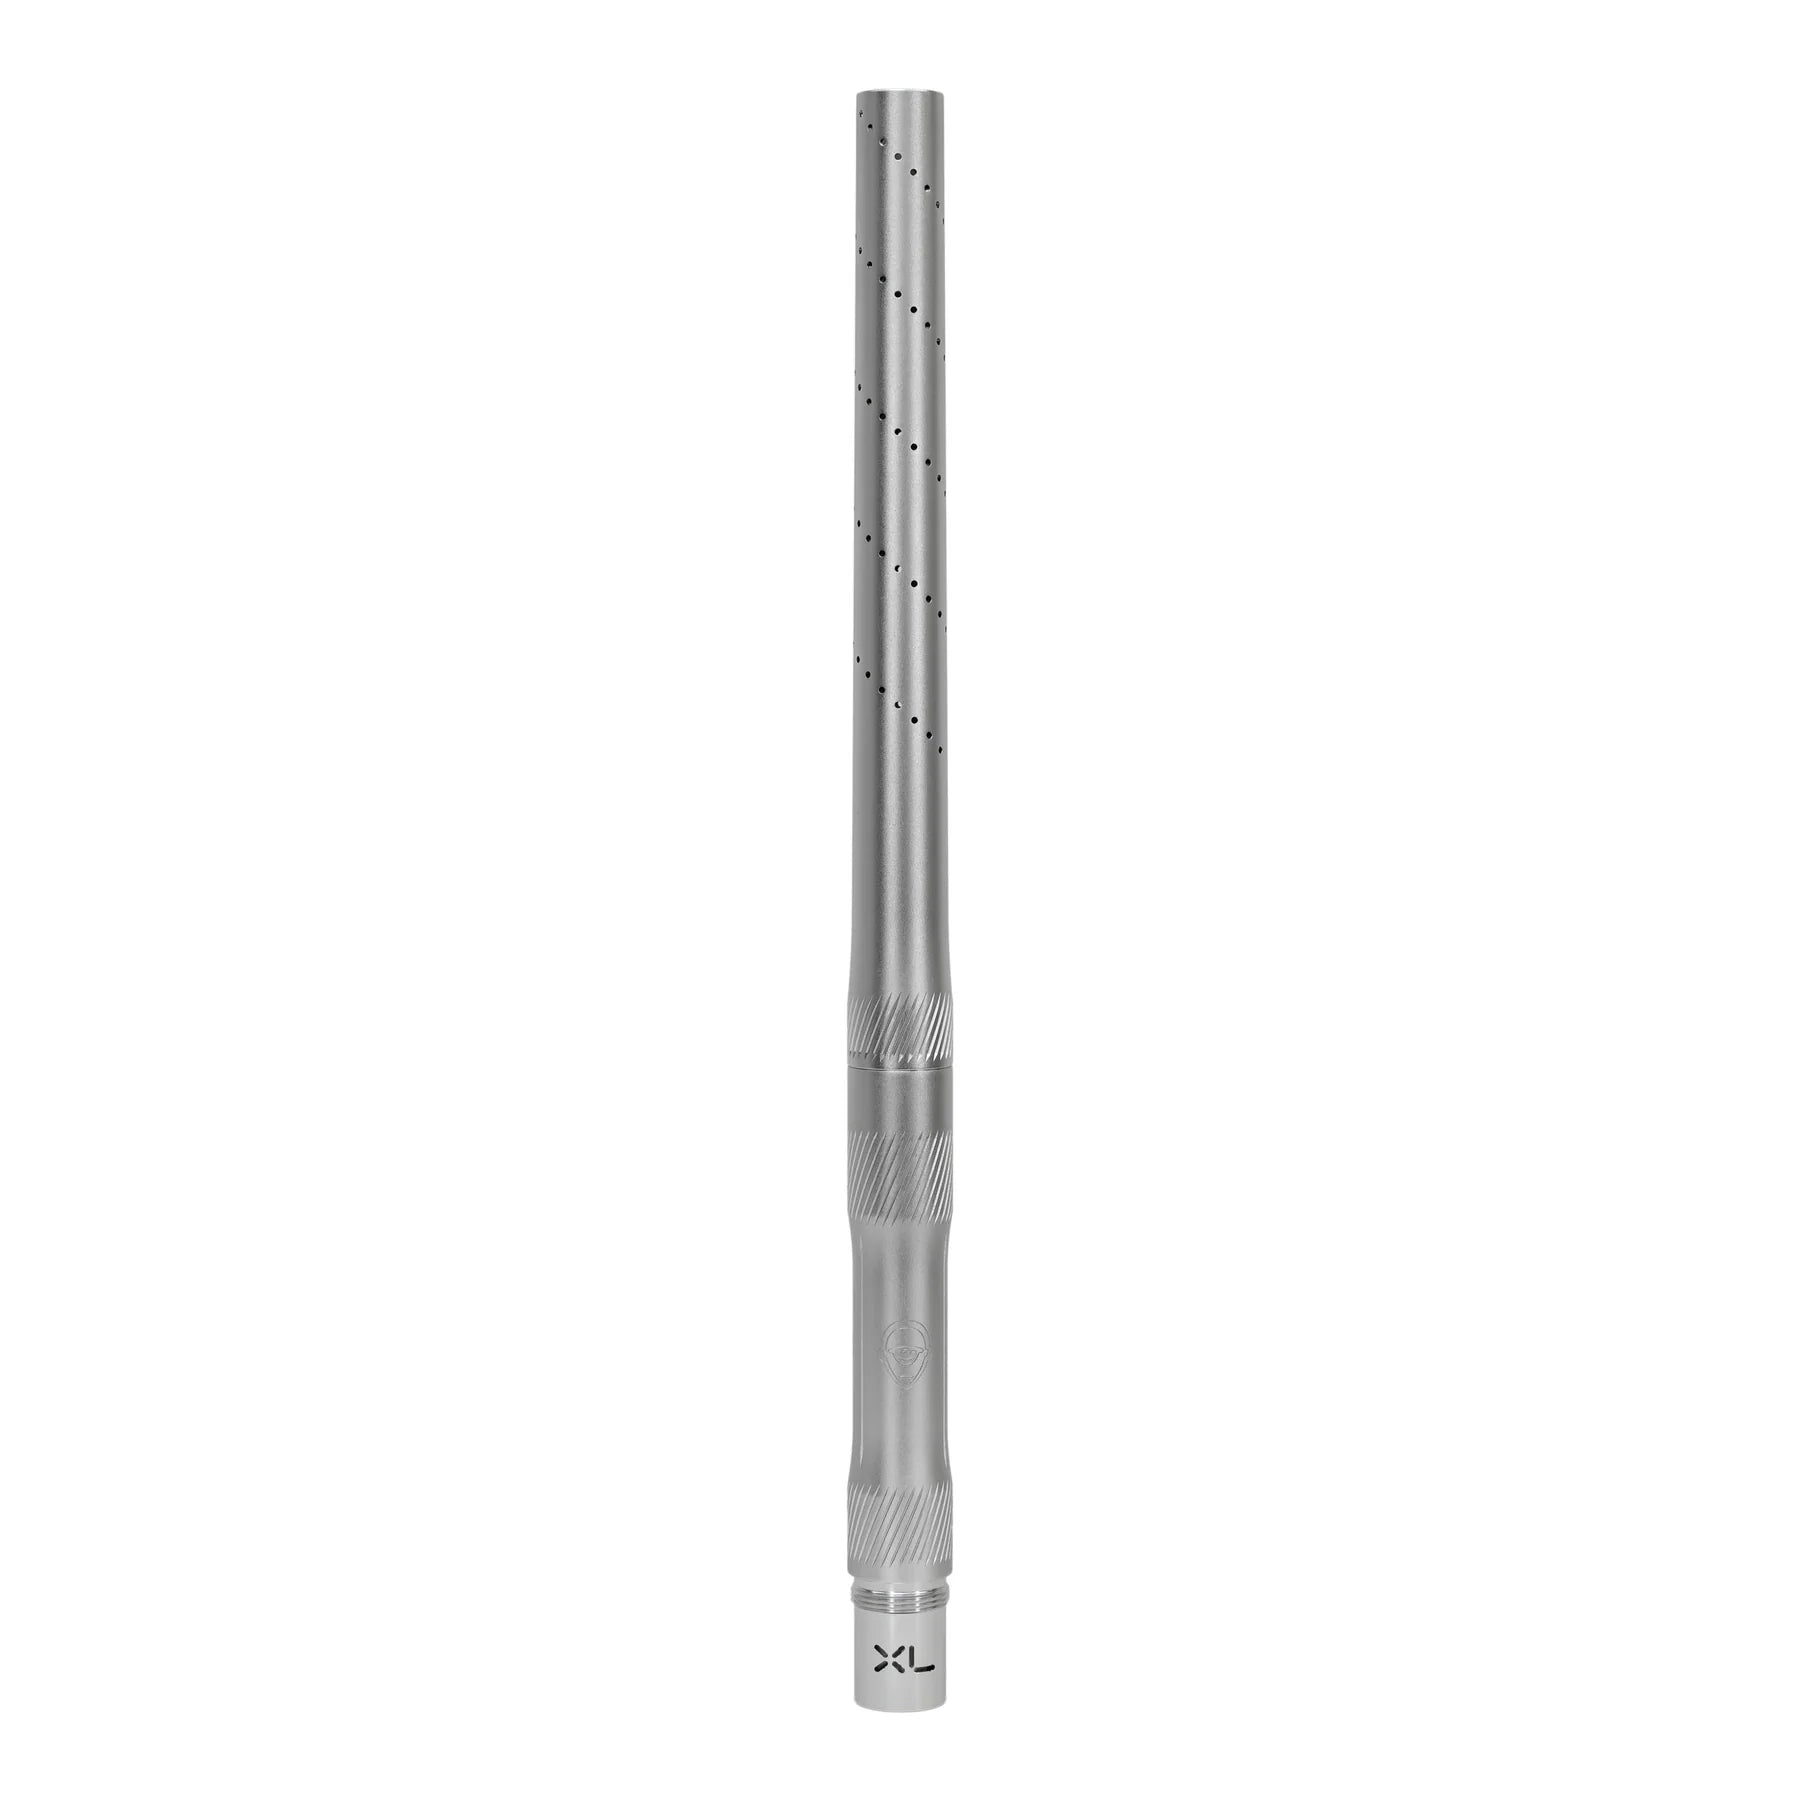 FREAK XL - White (Silver) Anodized - Full Barrel Kit - Autococker Thread - Aluminum Insert